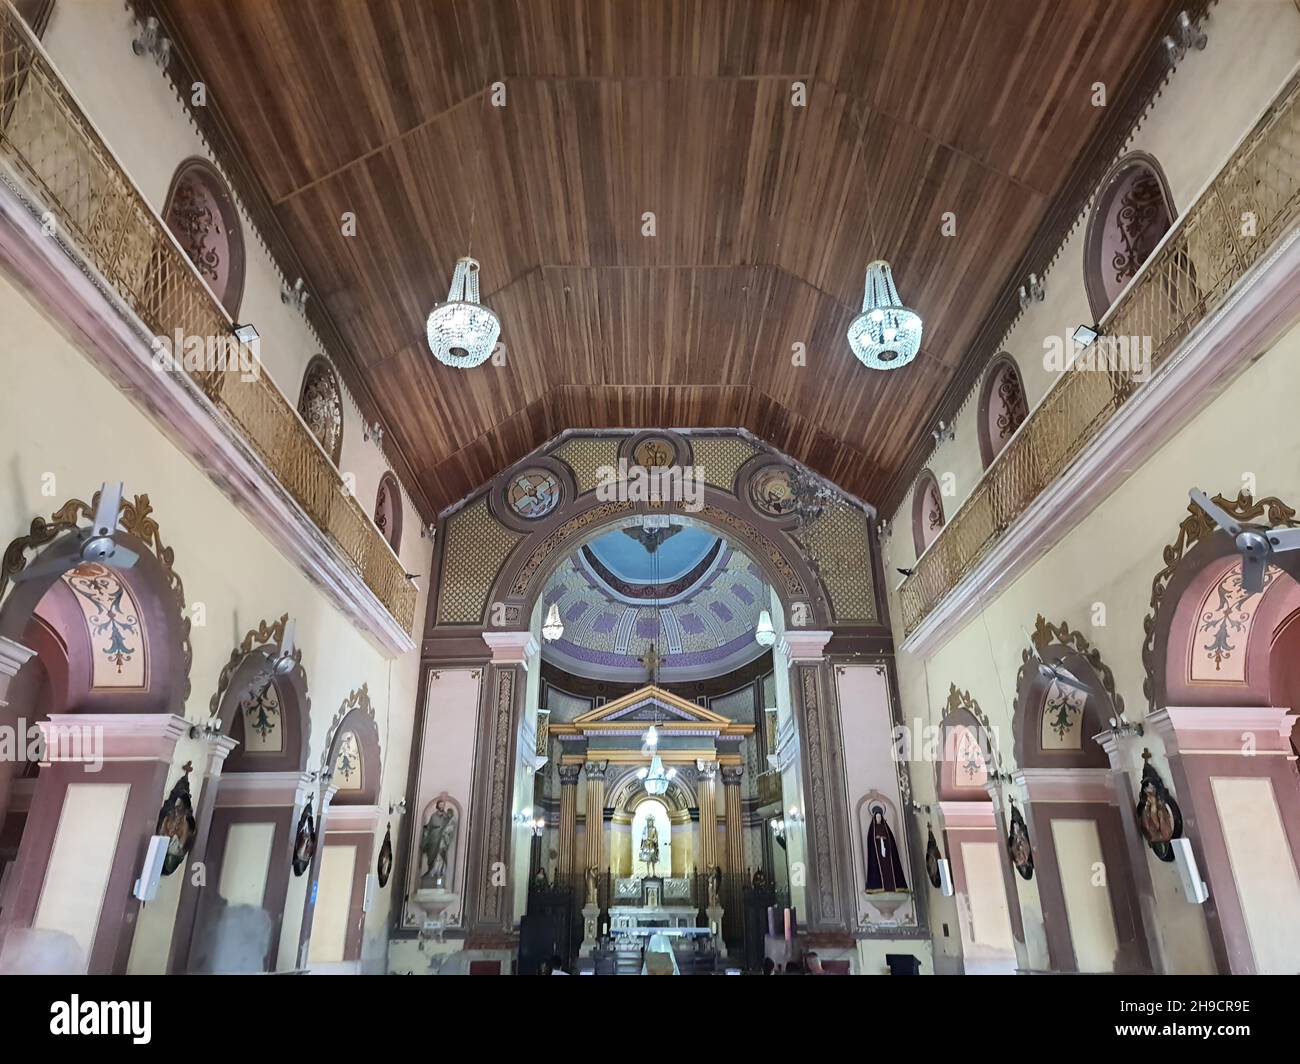 Sanctuary Parish of Senhor Bom Jesus de Pirapora, inside the church. Sao Paulo, Brazil. Stock Photo